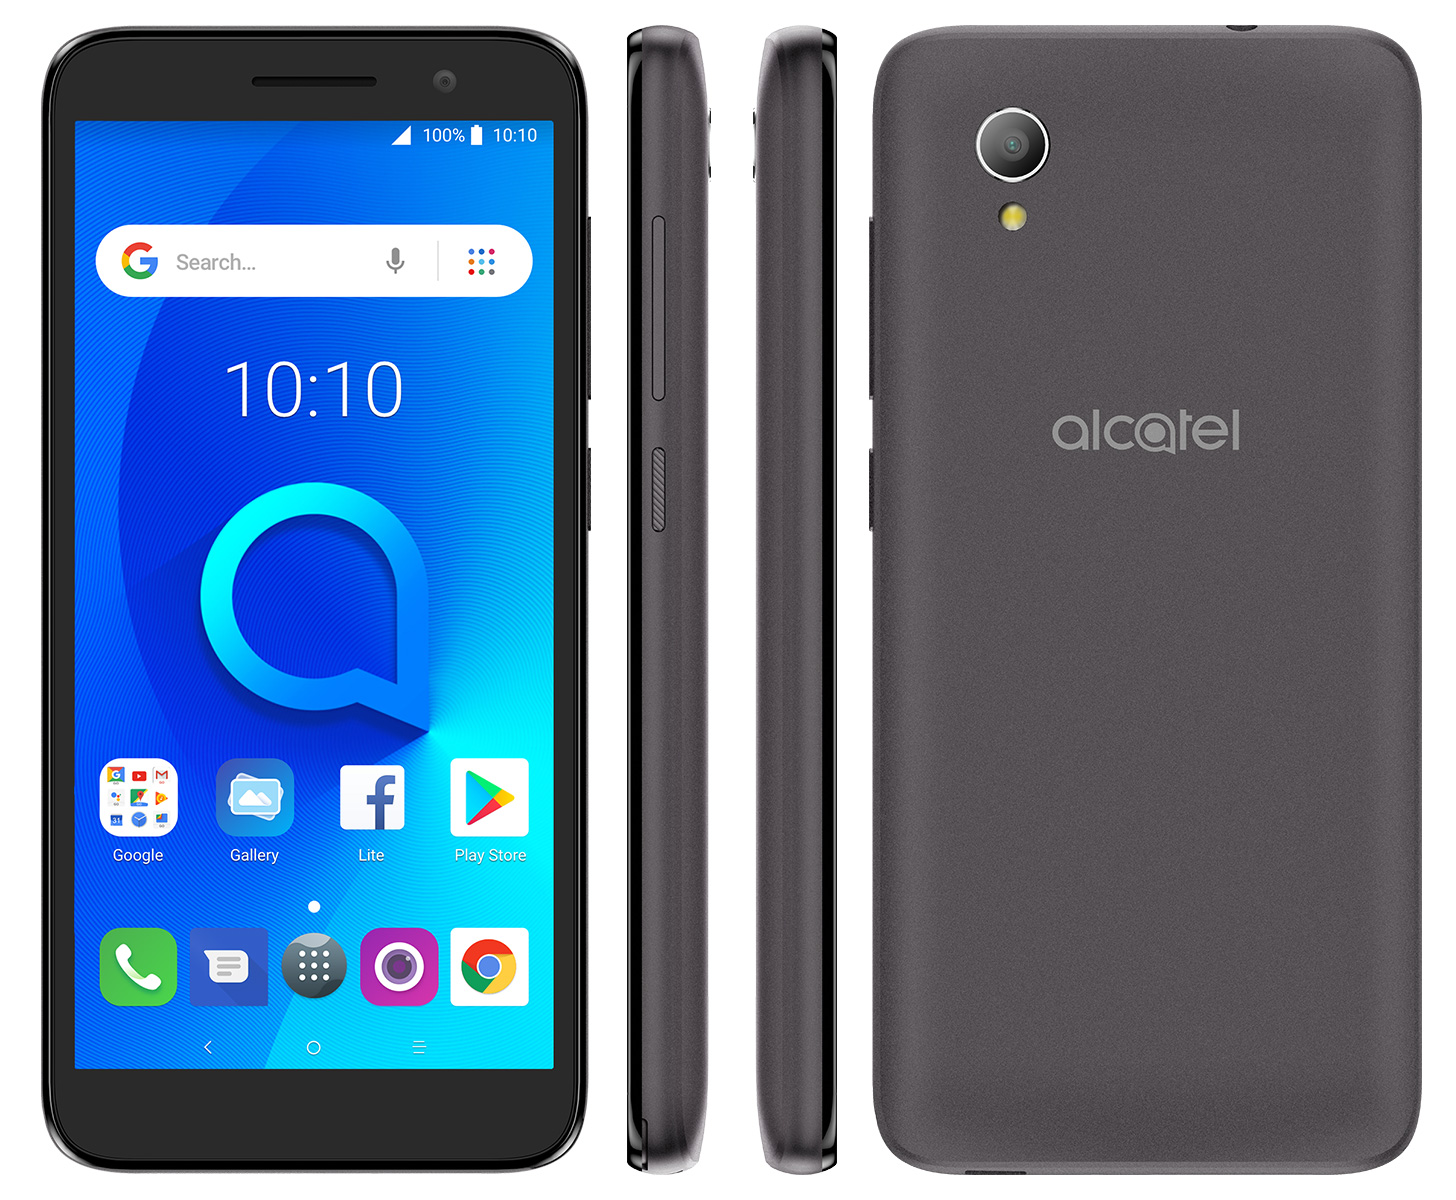 Alcatel brings $80 unlocked Android Phones to Amazon - Phandroid